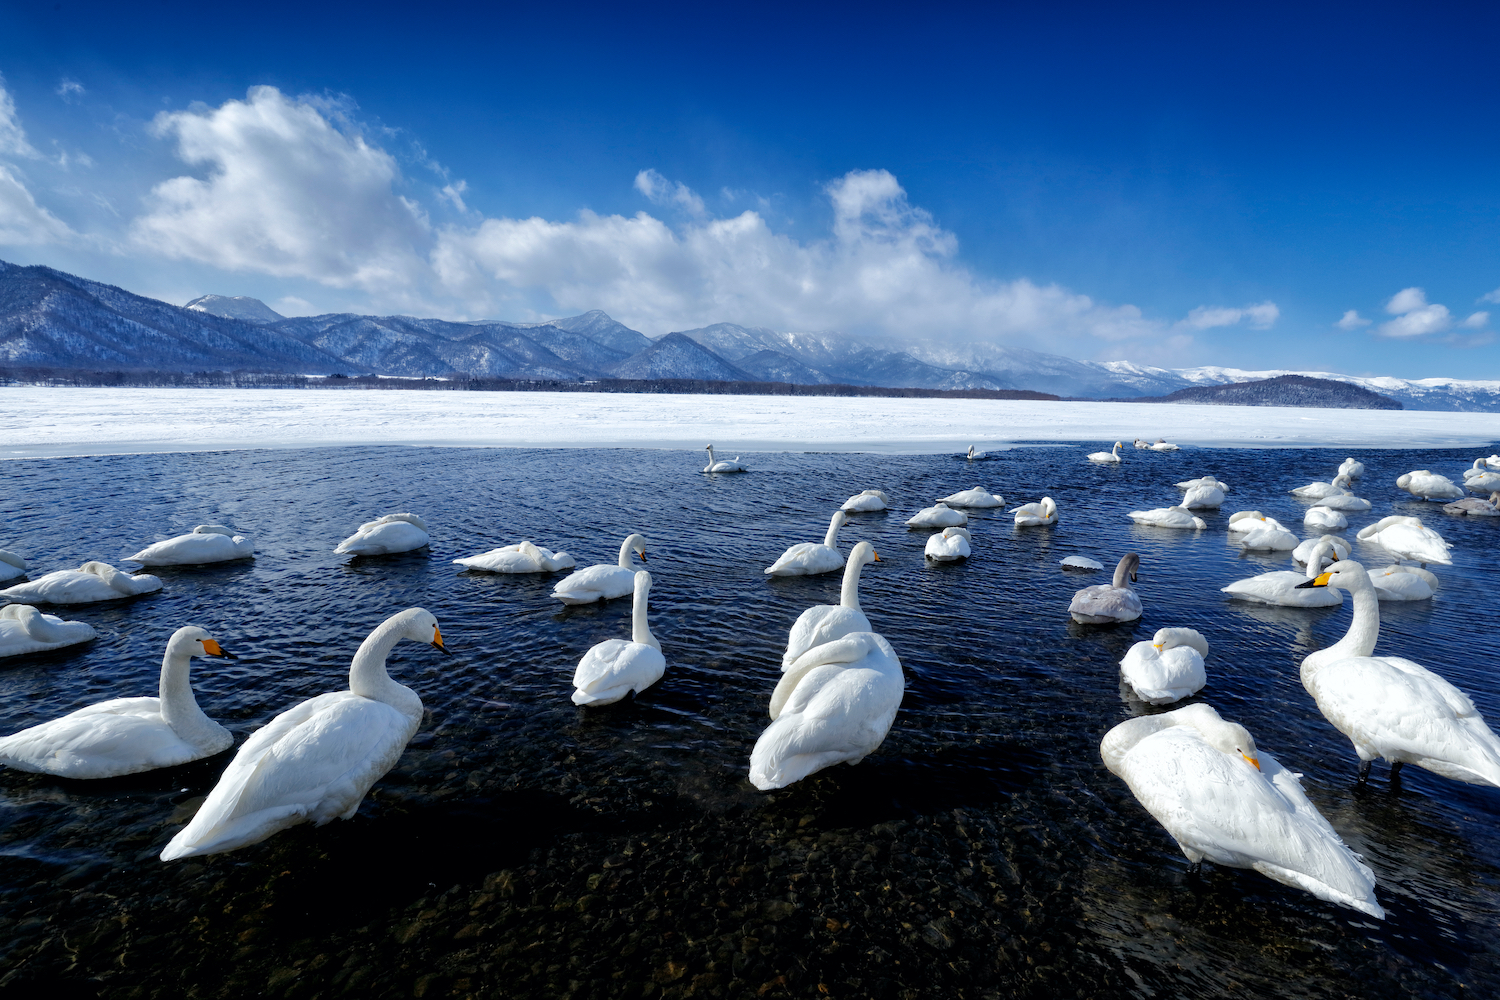 Whooper Swans, Cygnus cygnus, birds in the nature habitat, Lake Kusharo, winter scene with snow and ice in the water, foggy mountain in the background, Hokkaido, Japan.